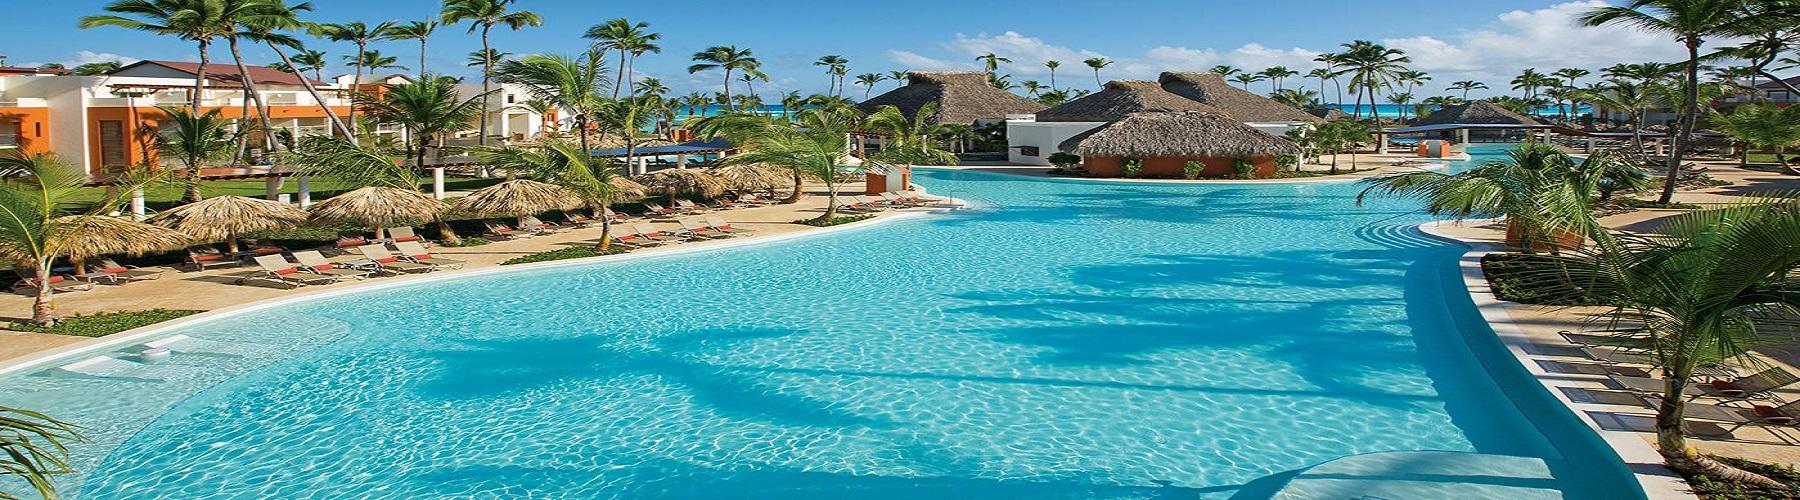 Отель Breathless Punta Cana Resort and Spa 5*